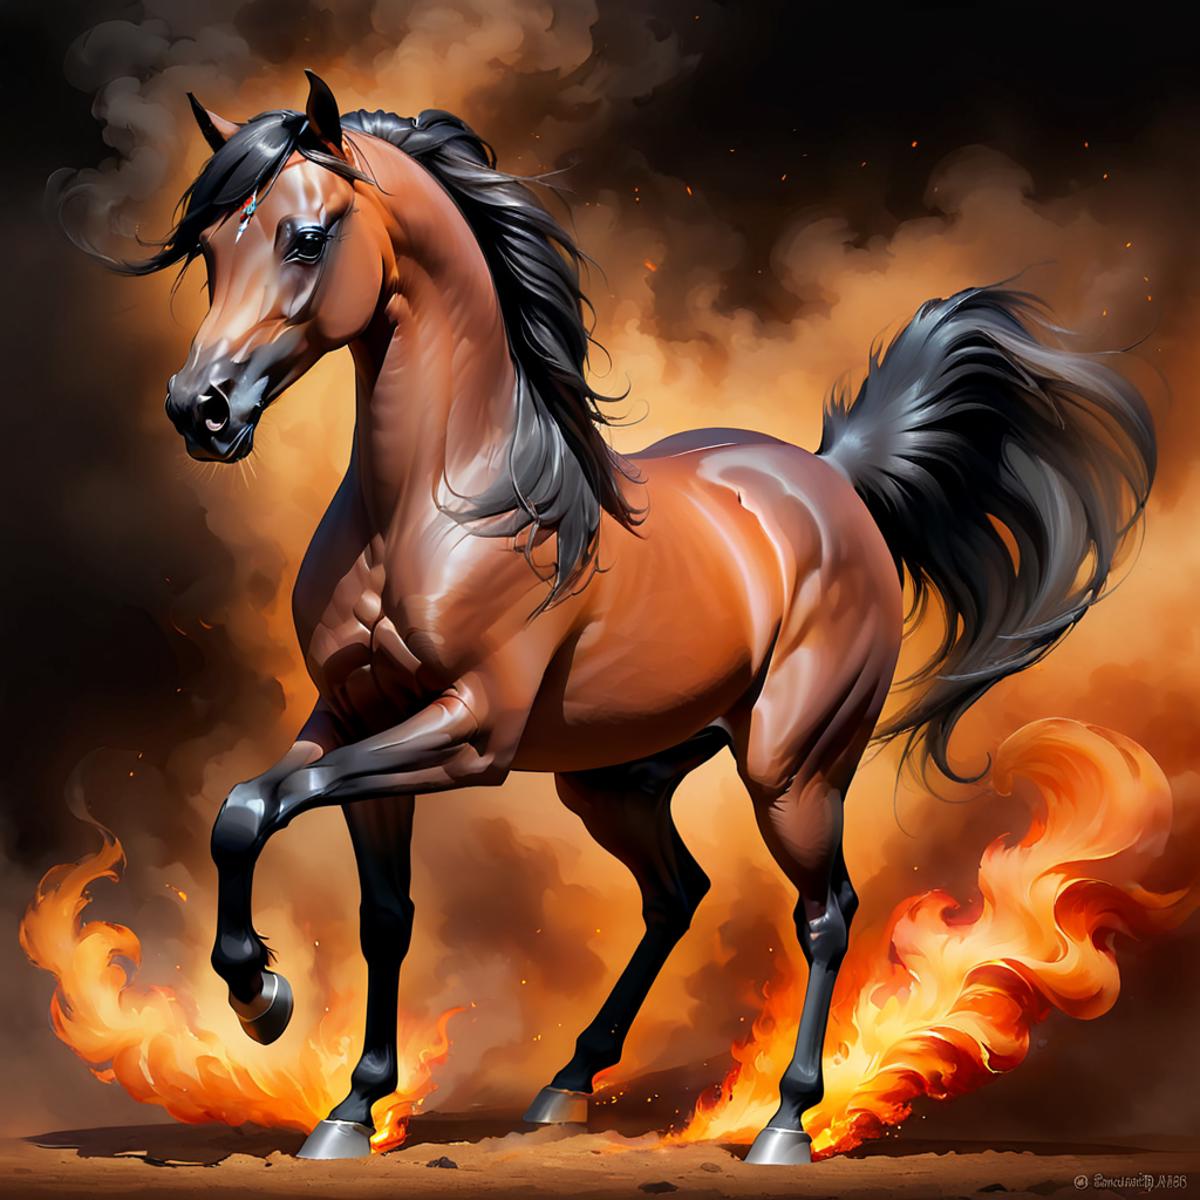 Arabians, Friesians, & Centaurs image by AthenaShadow